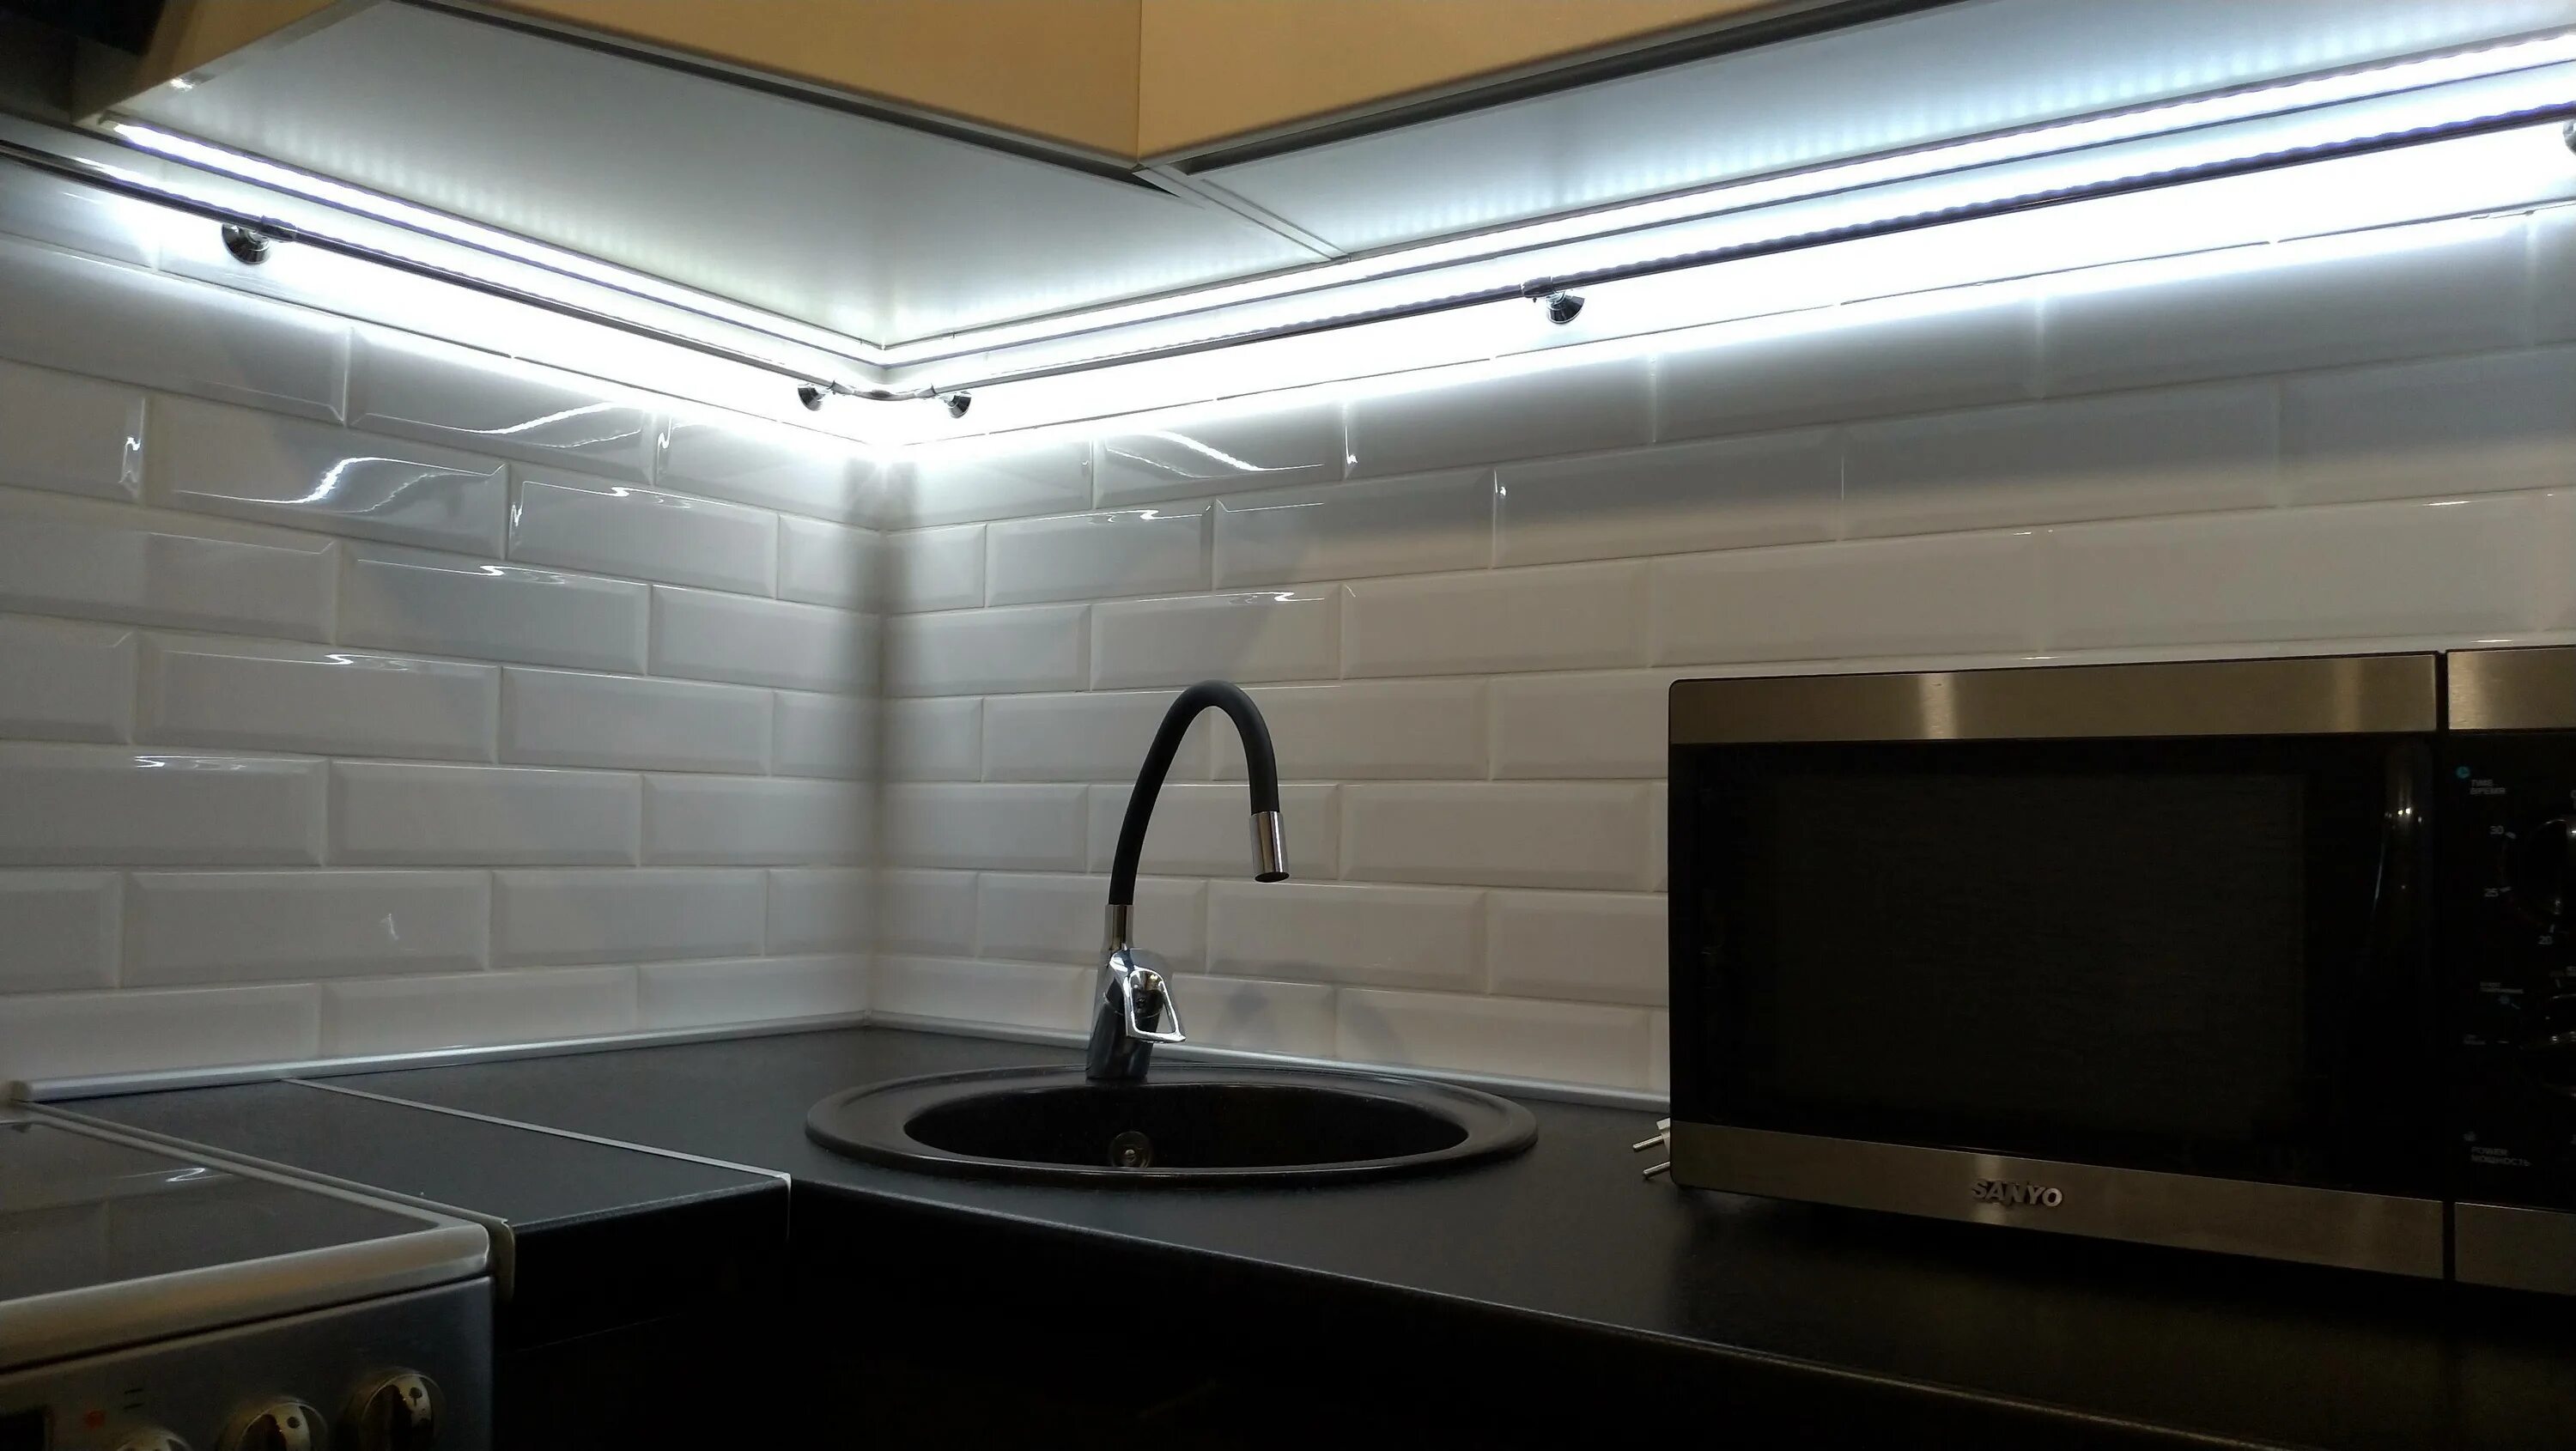 Кухня без подсветки. Подсветка для кухни. Светодиодная подсветка для кухни. Подсветка кухни светодиодной лентой. Подсветка для кухни под шкафы светодиодная.